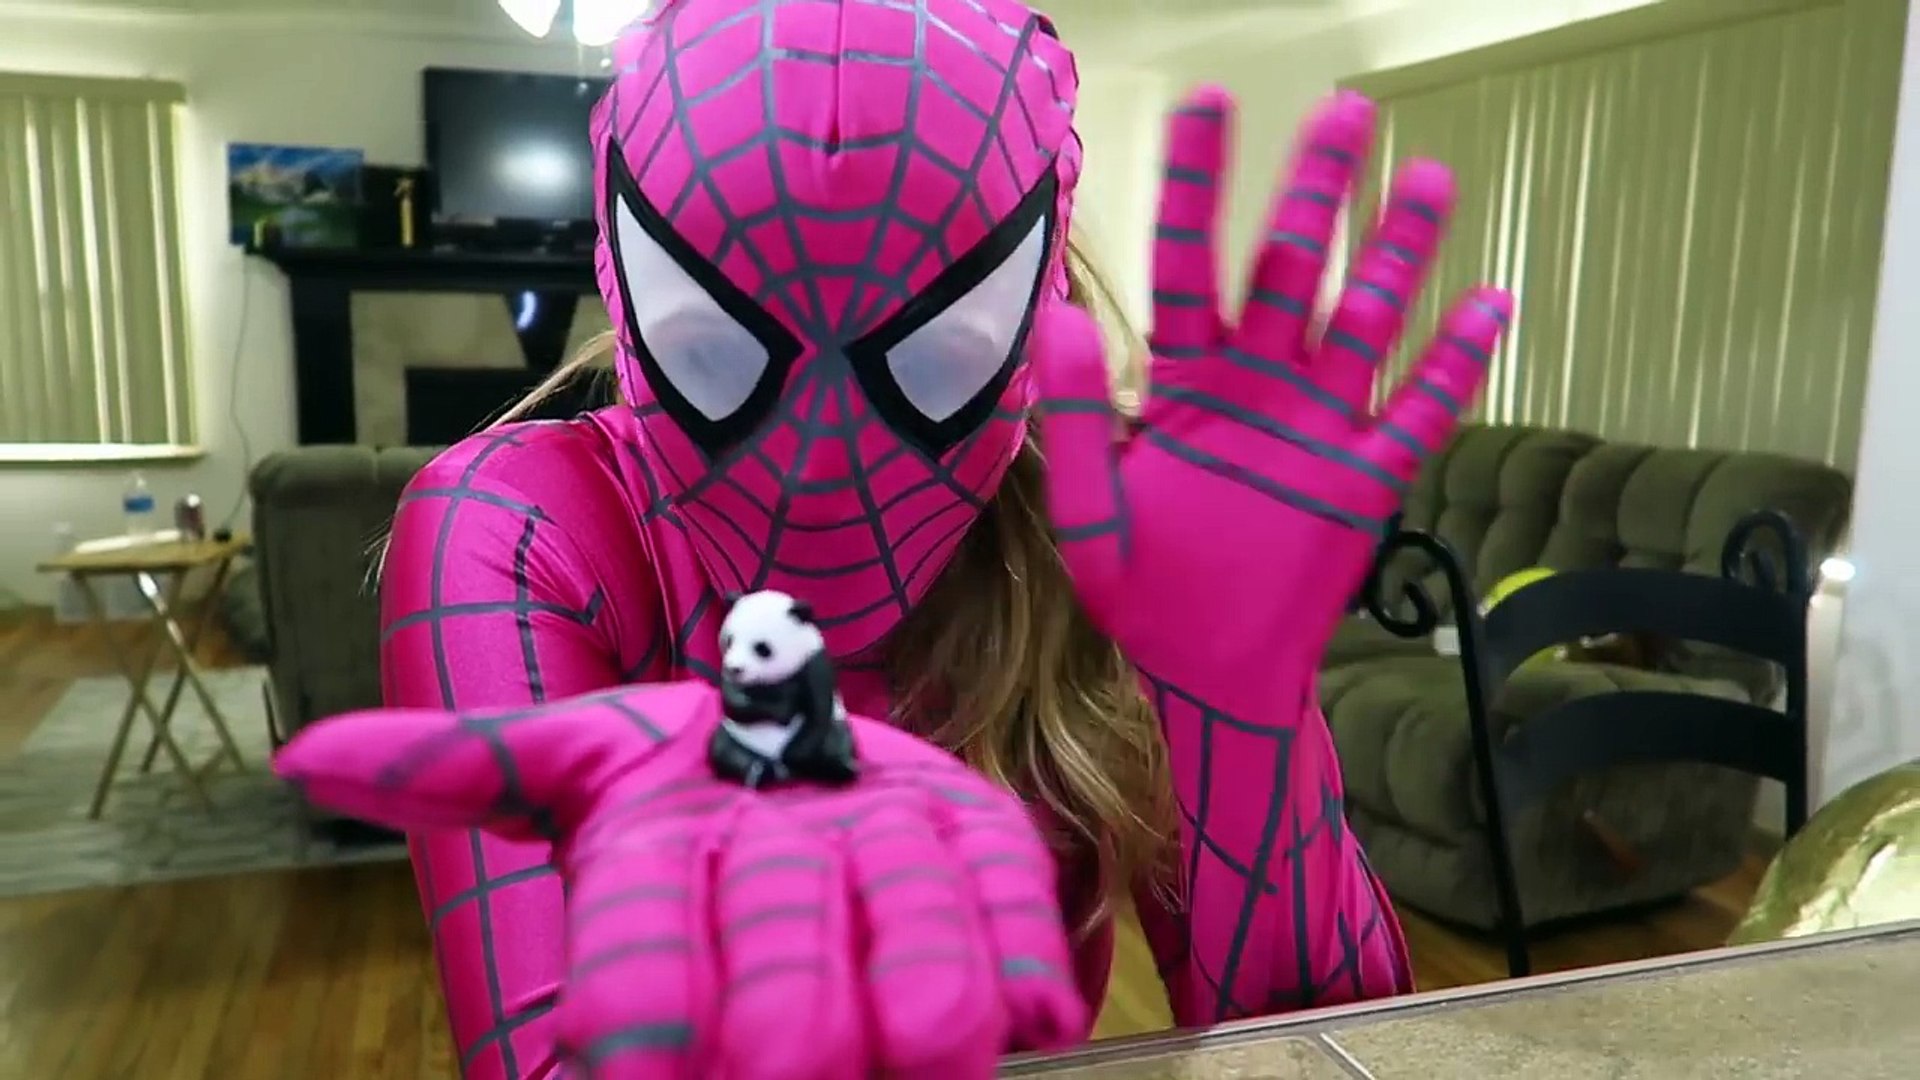 Spider-man Pink Spidergirl Deadpool Joker Minion Paw Patrol vs Giant  Surprise Egg Yowie Kinder Toy - video Dailymotion